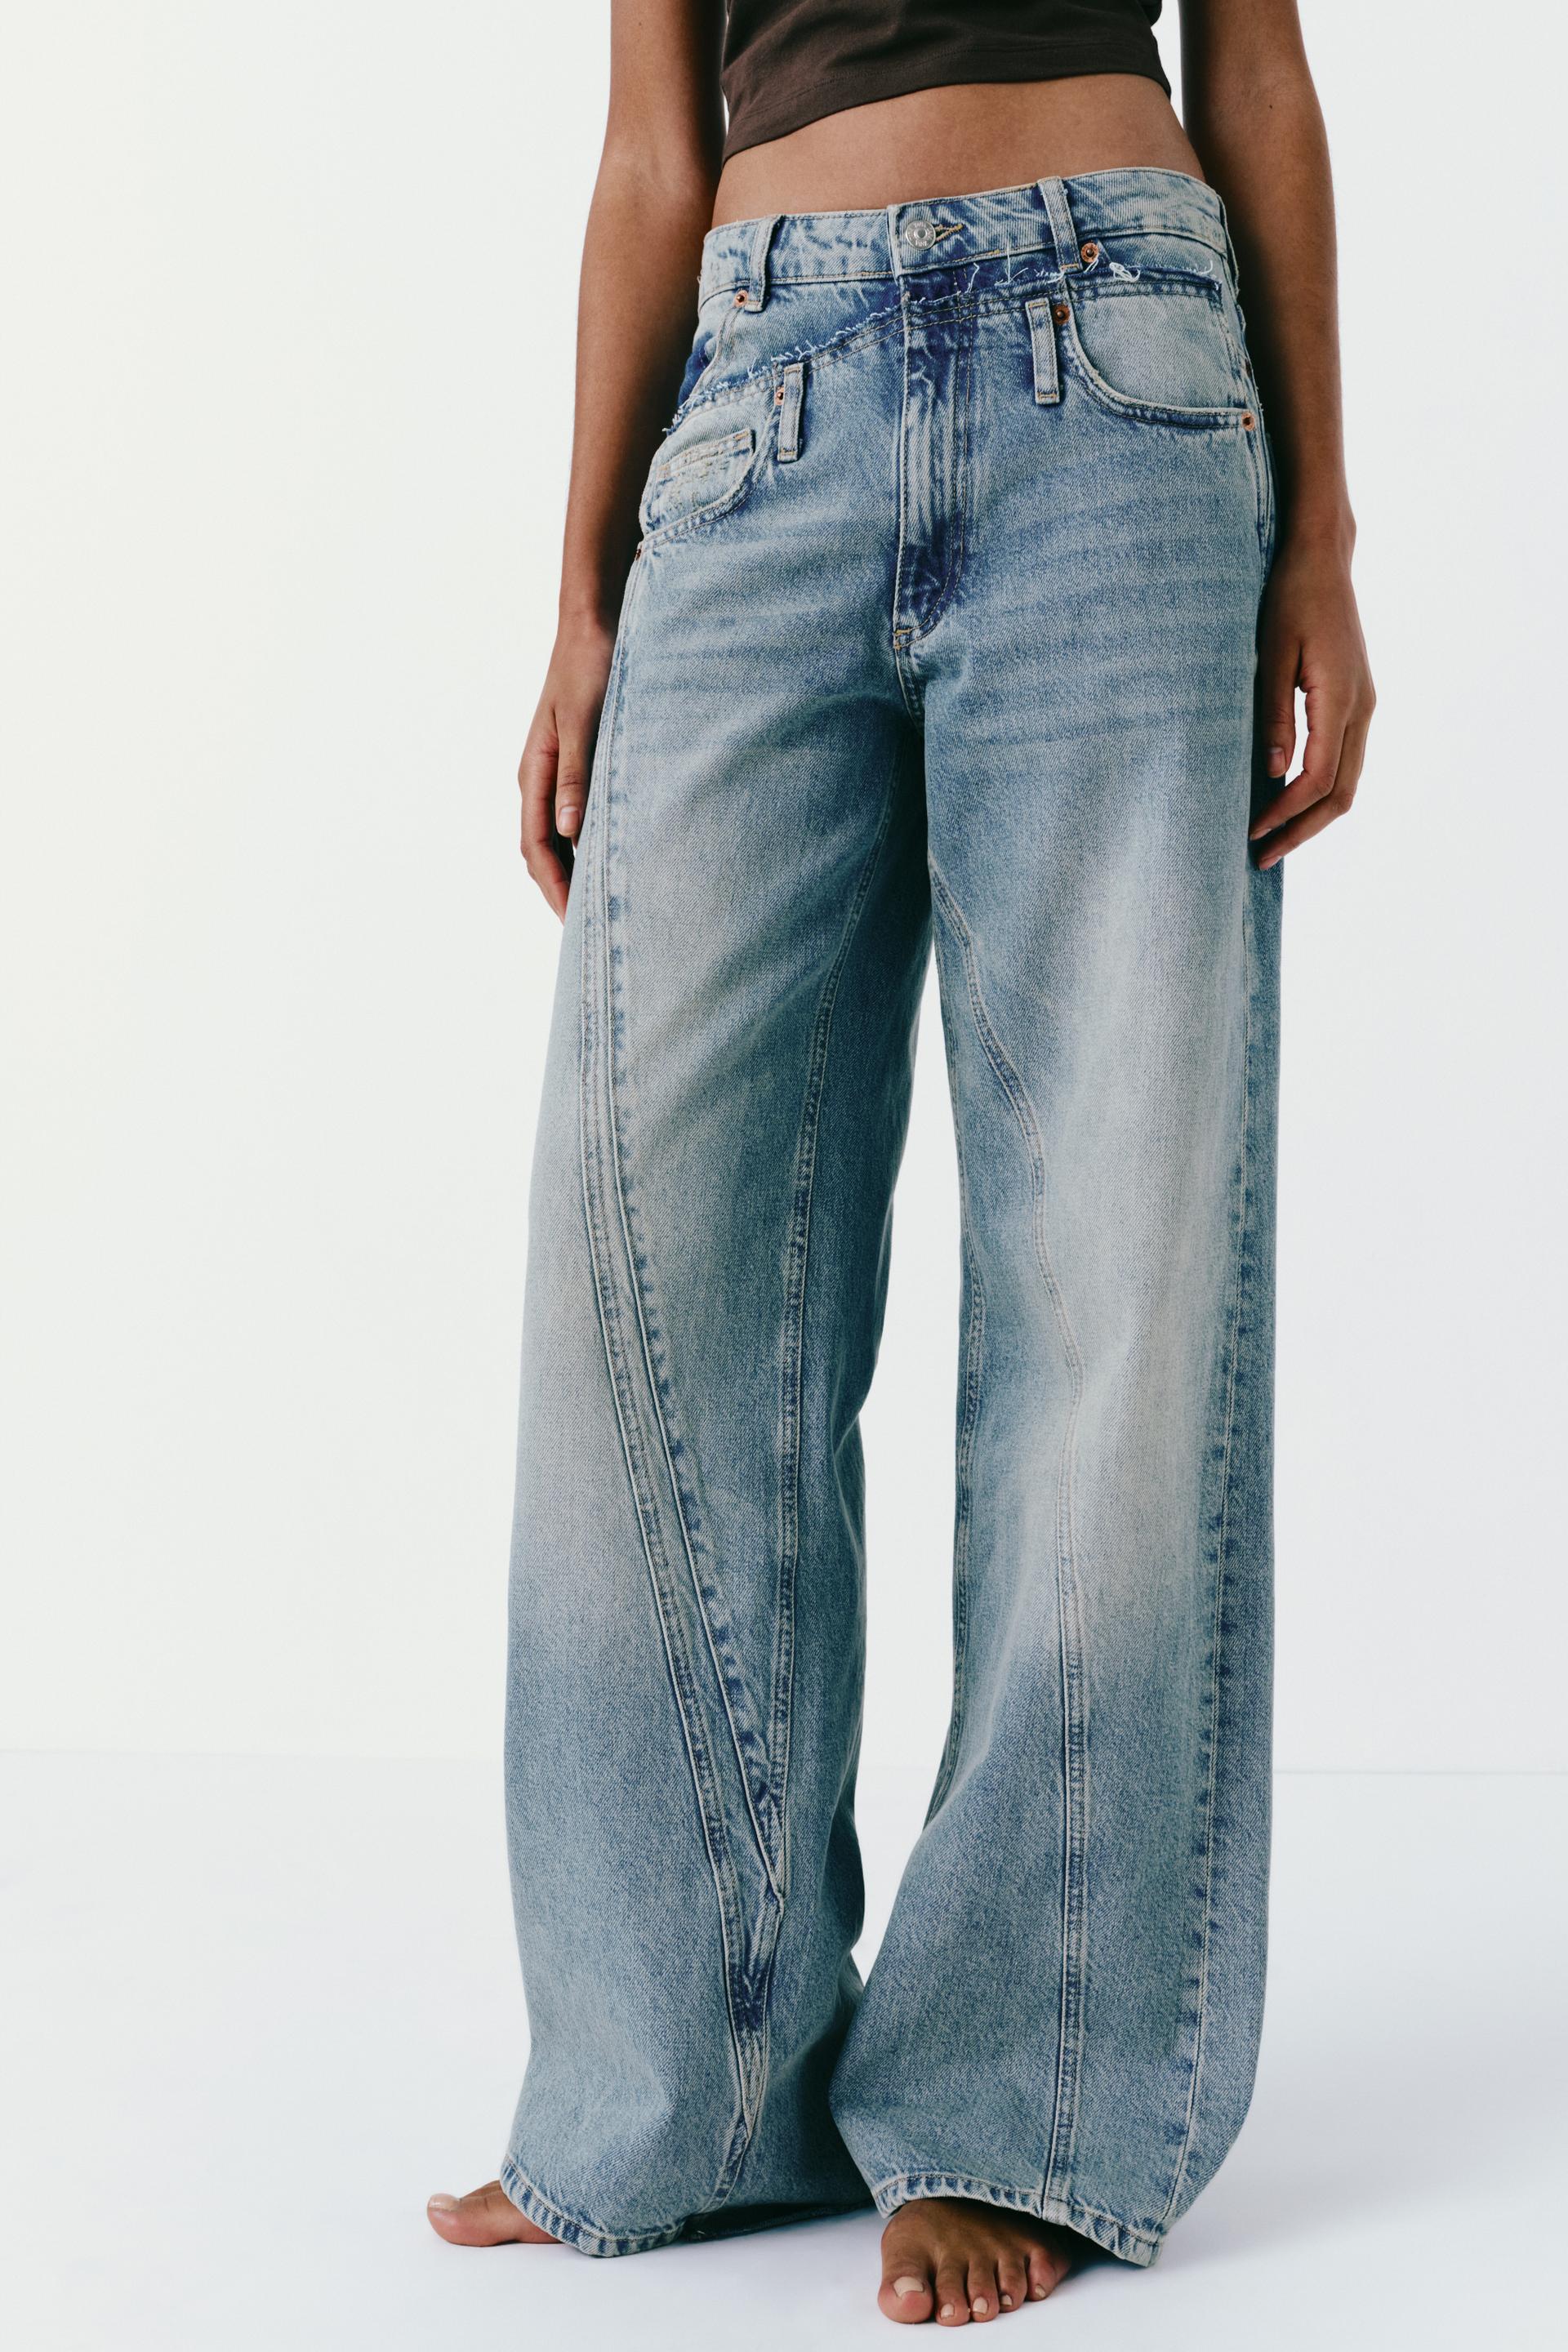 ZARA TRF Wide Leg jeans per @Lilly's suggestion #zarahaul